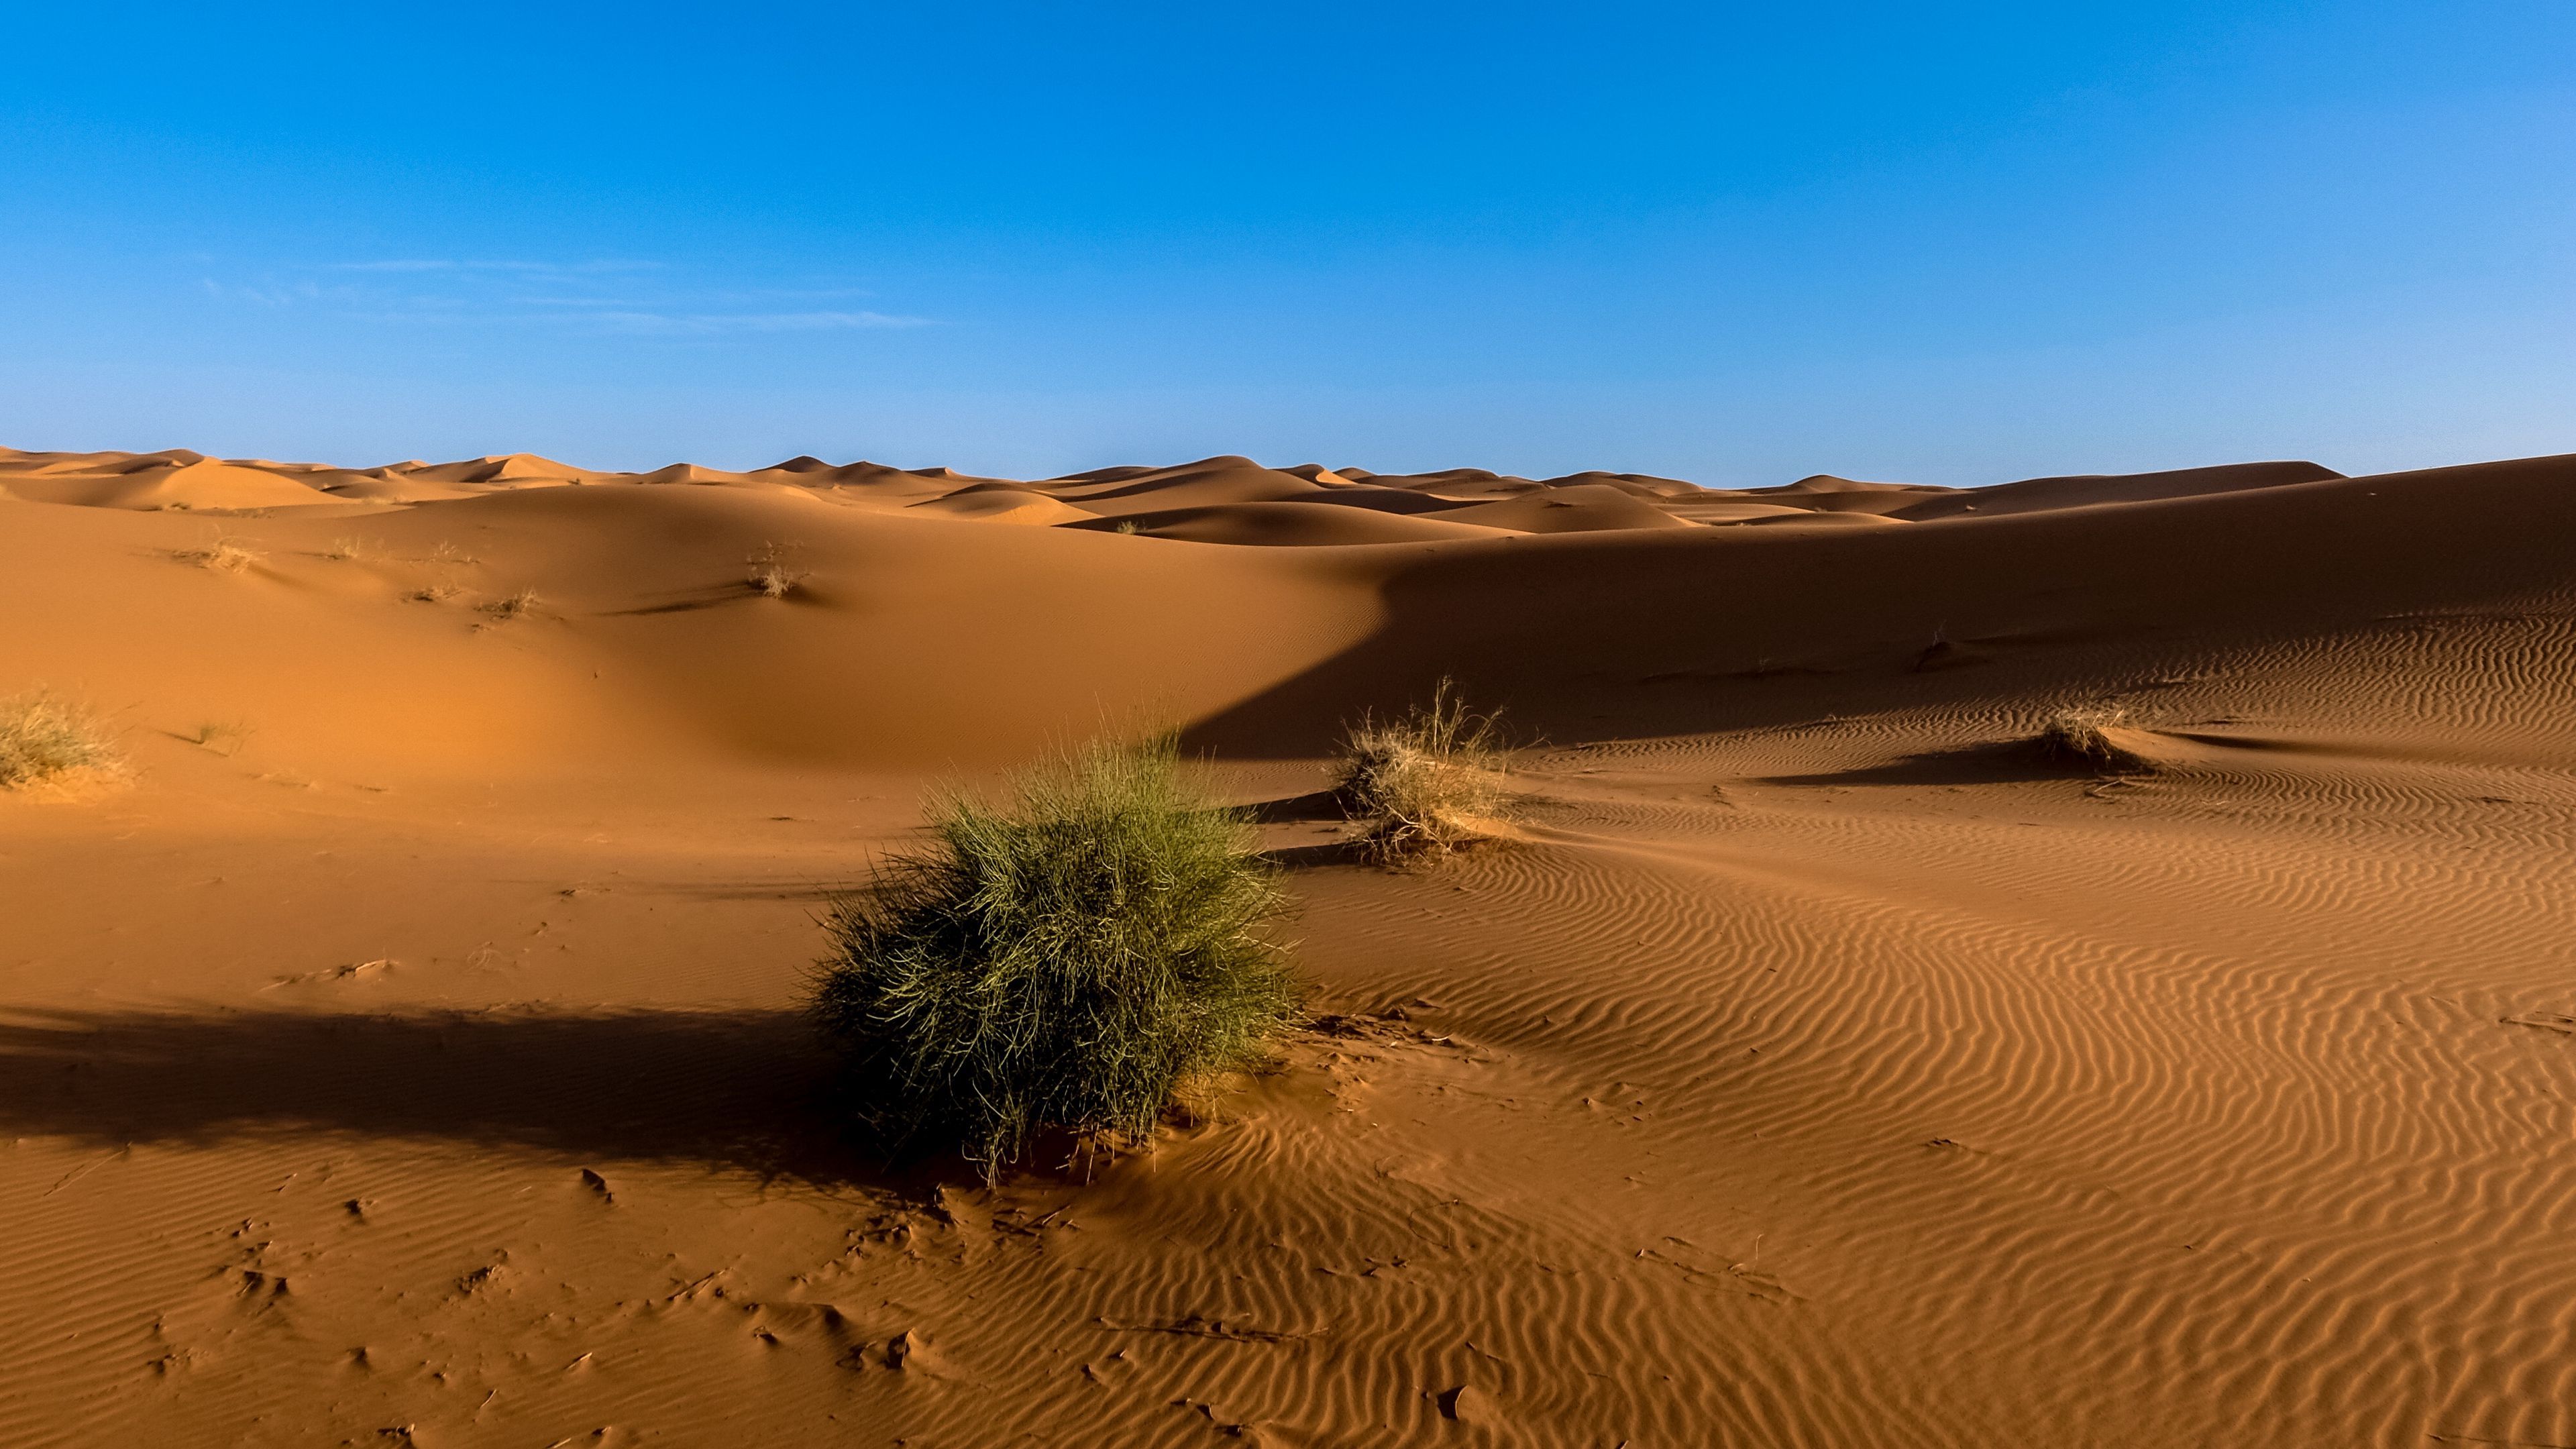 Download wallpaper 3840x2160 sahara, desert, sand, sky 4k uhd 16:9 HD background